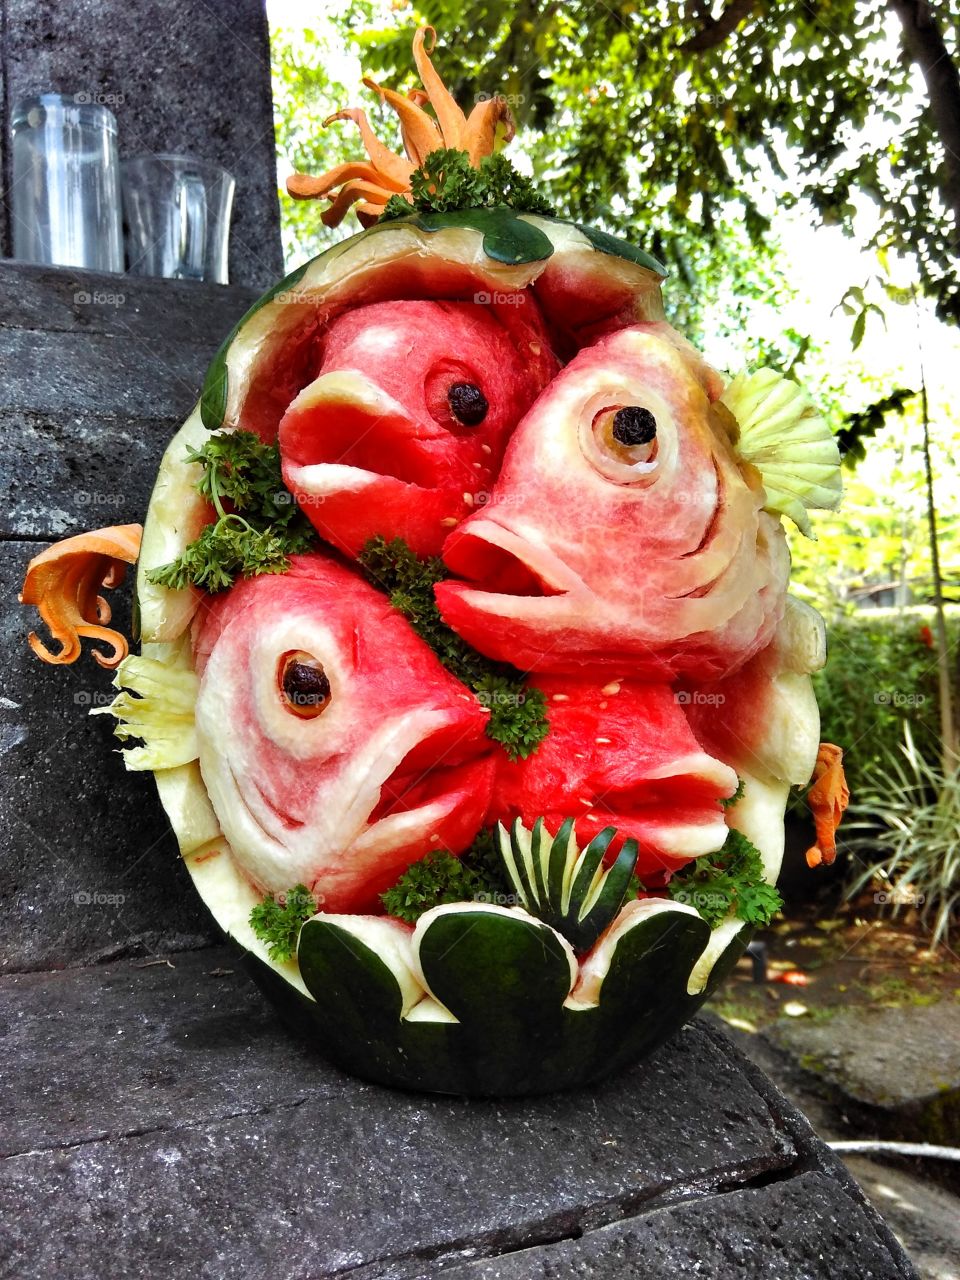 fruit carving (watermelon)